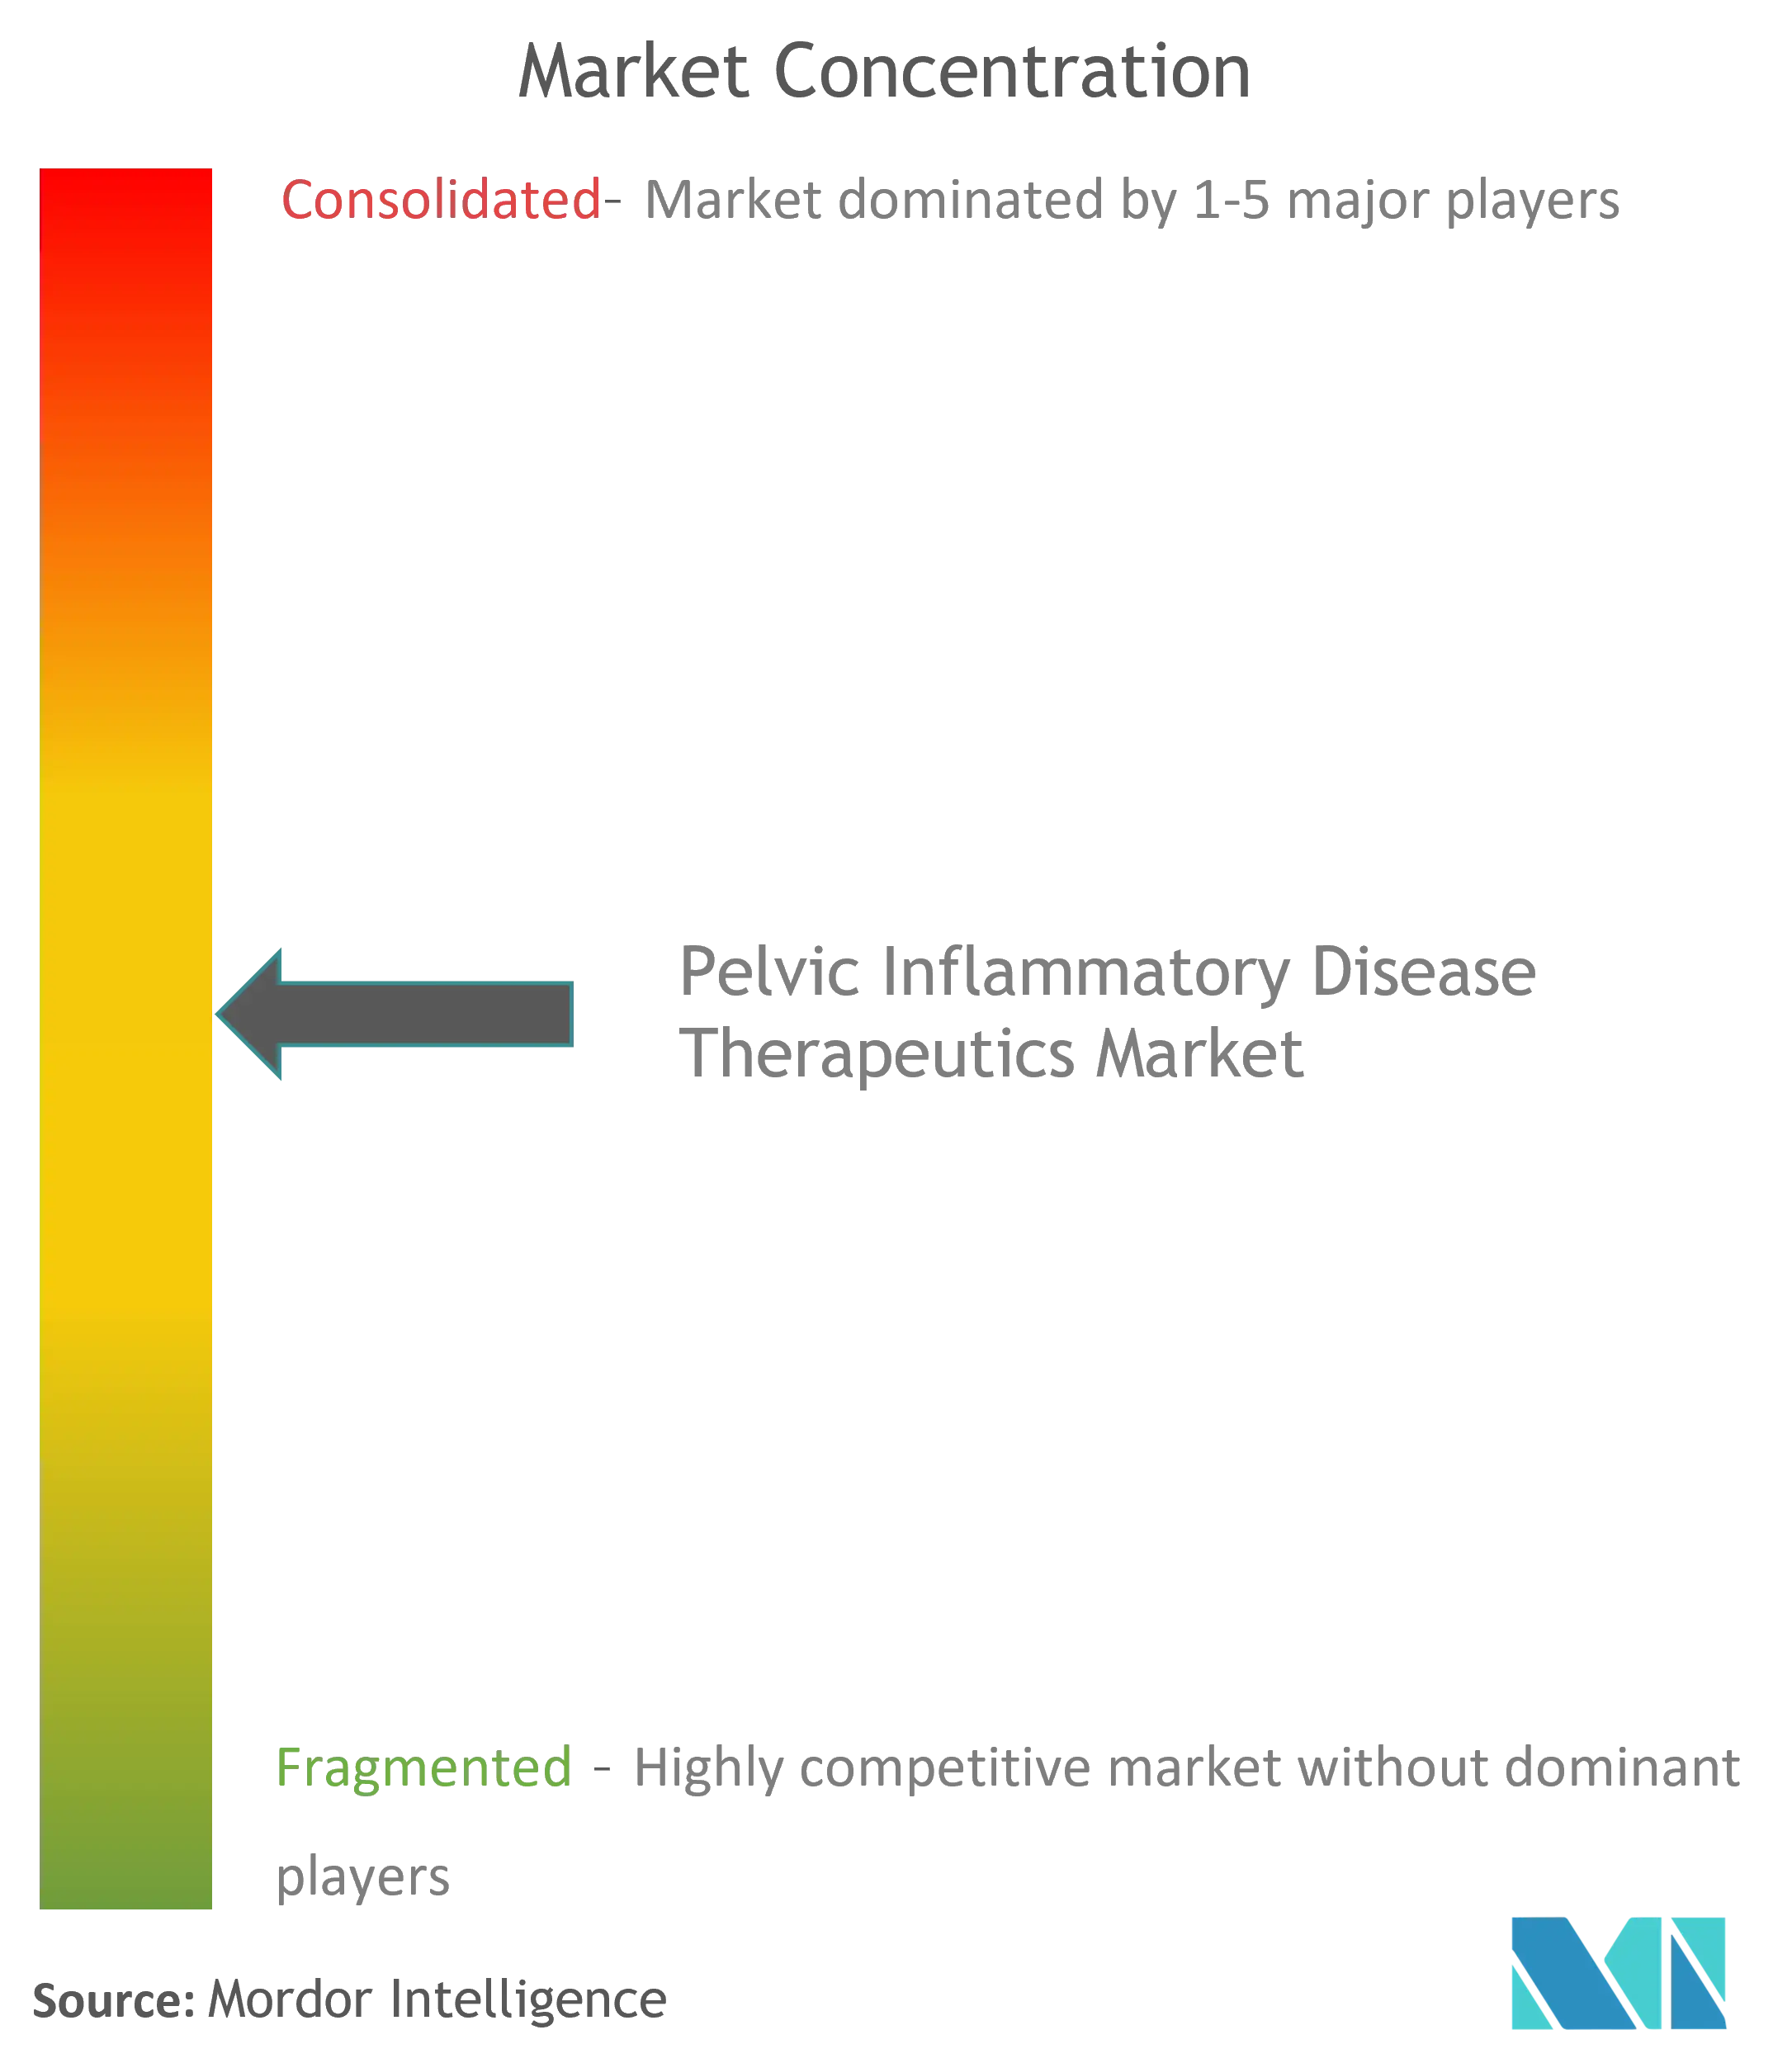 Pelvic Inflammatory Disease Therapeutics Market Concentration